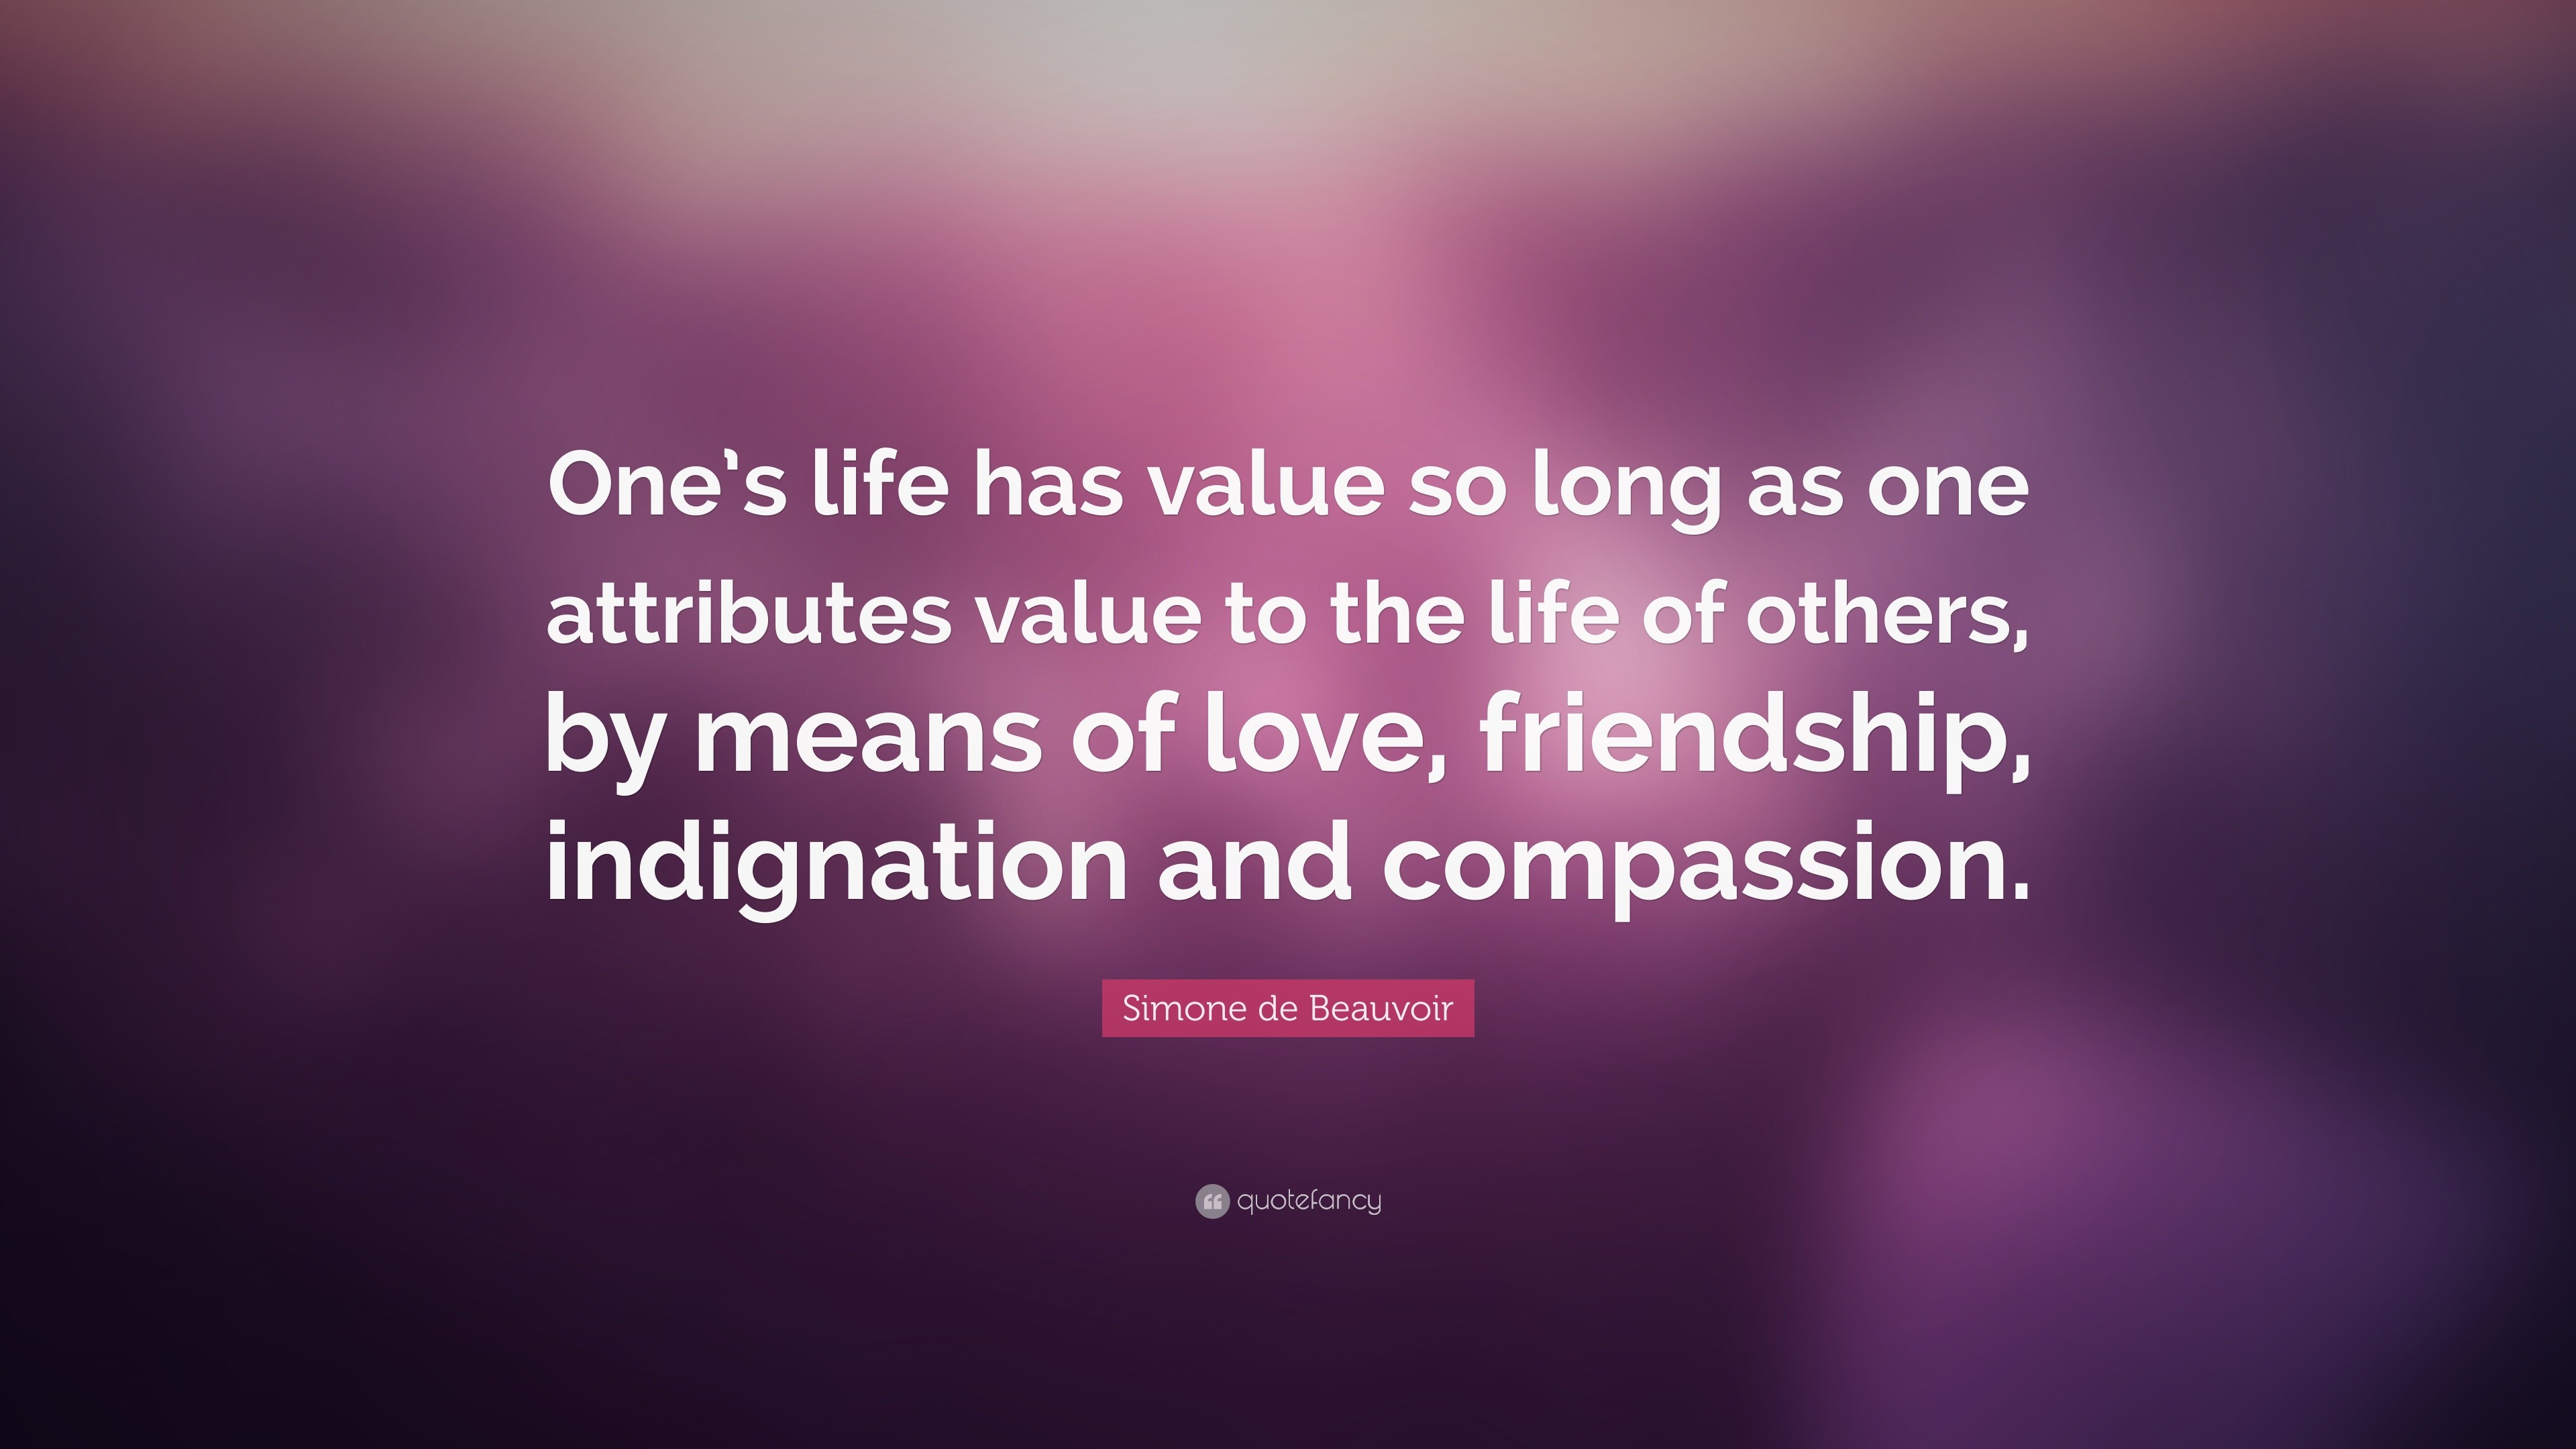 Simone de Beauvoir Quote “ e s life has value so long as one attributes value